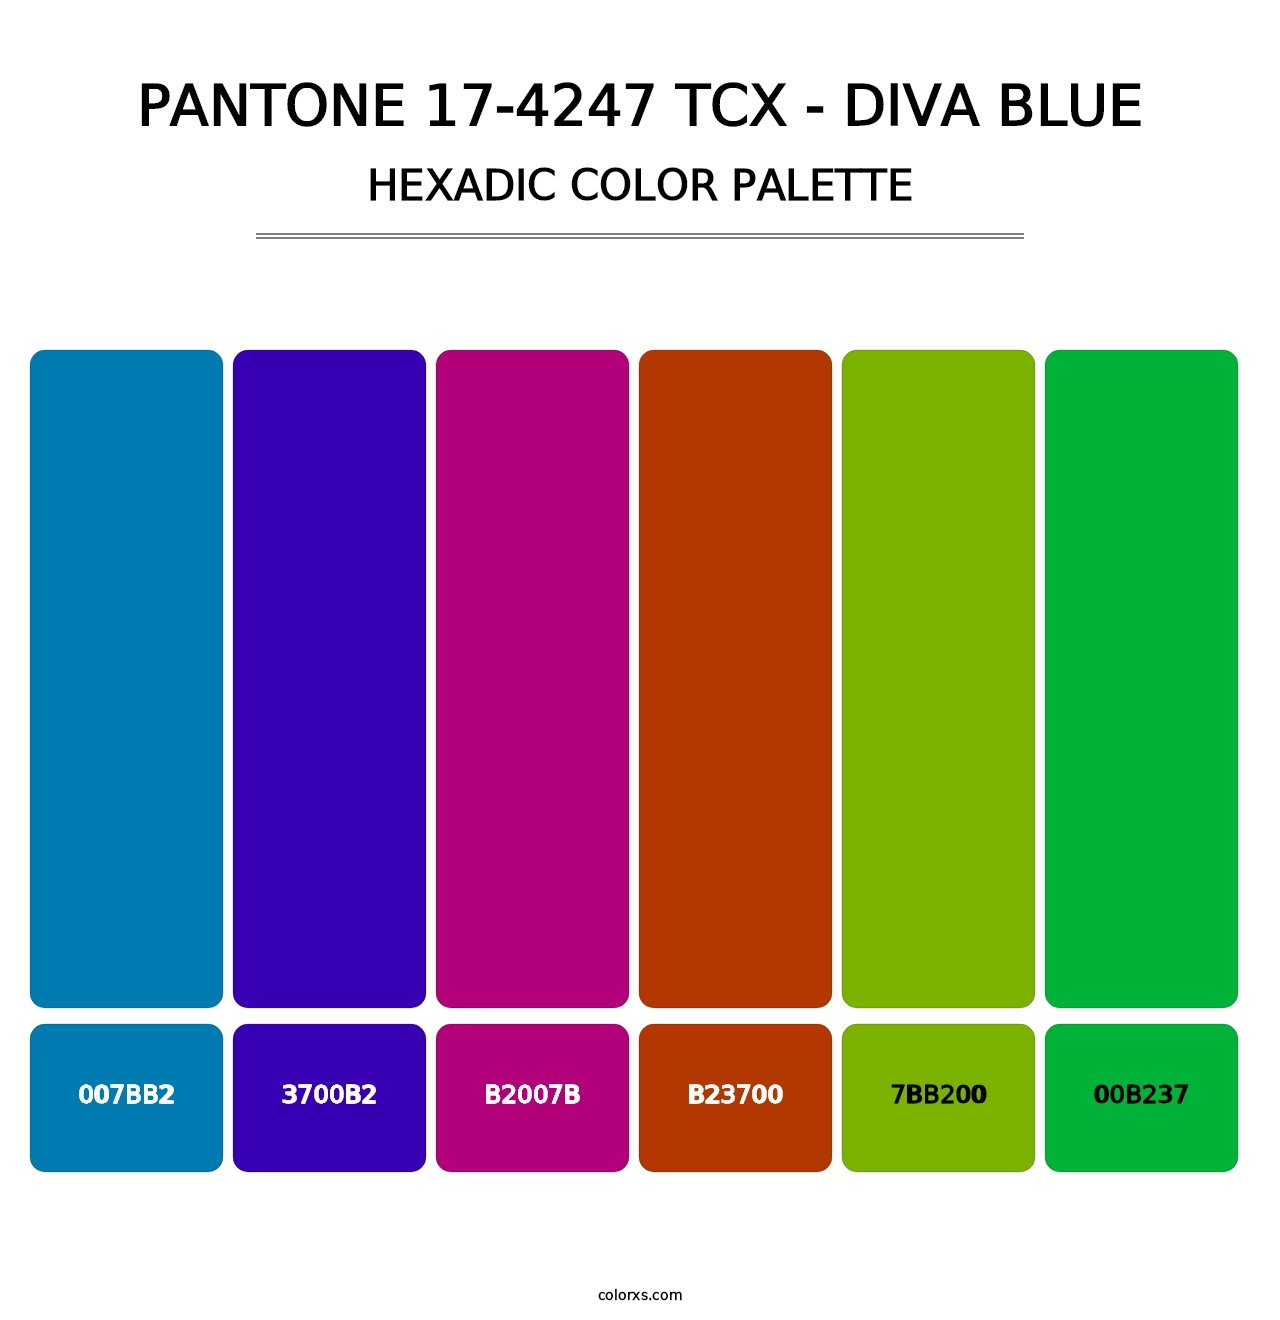 PANTONE 17-4247 TCX - Diva Blue - Hexadic Color Palette